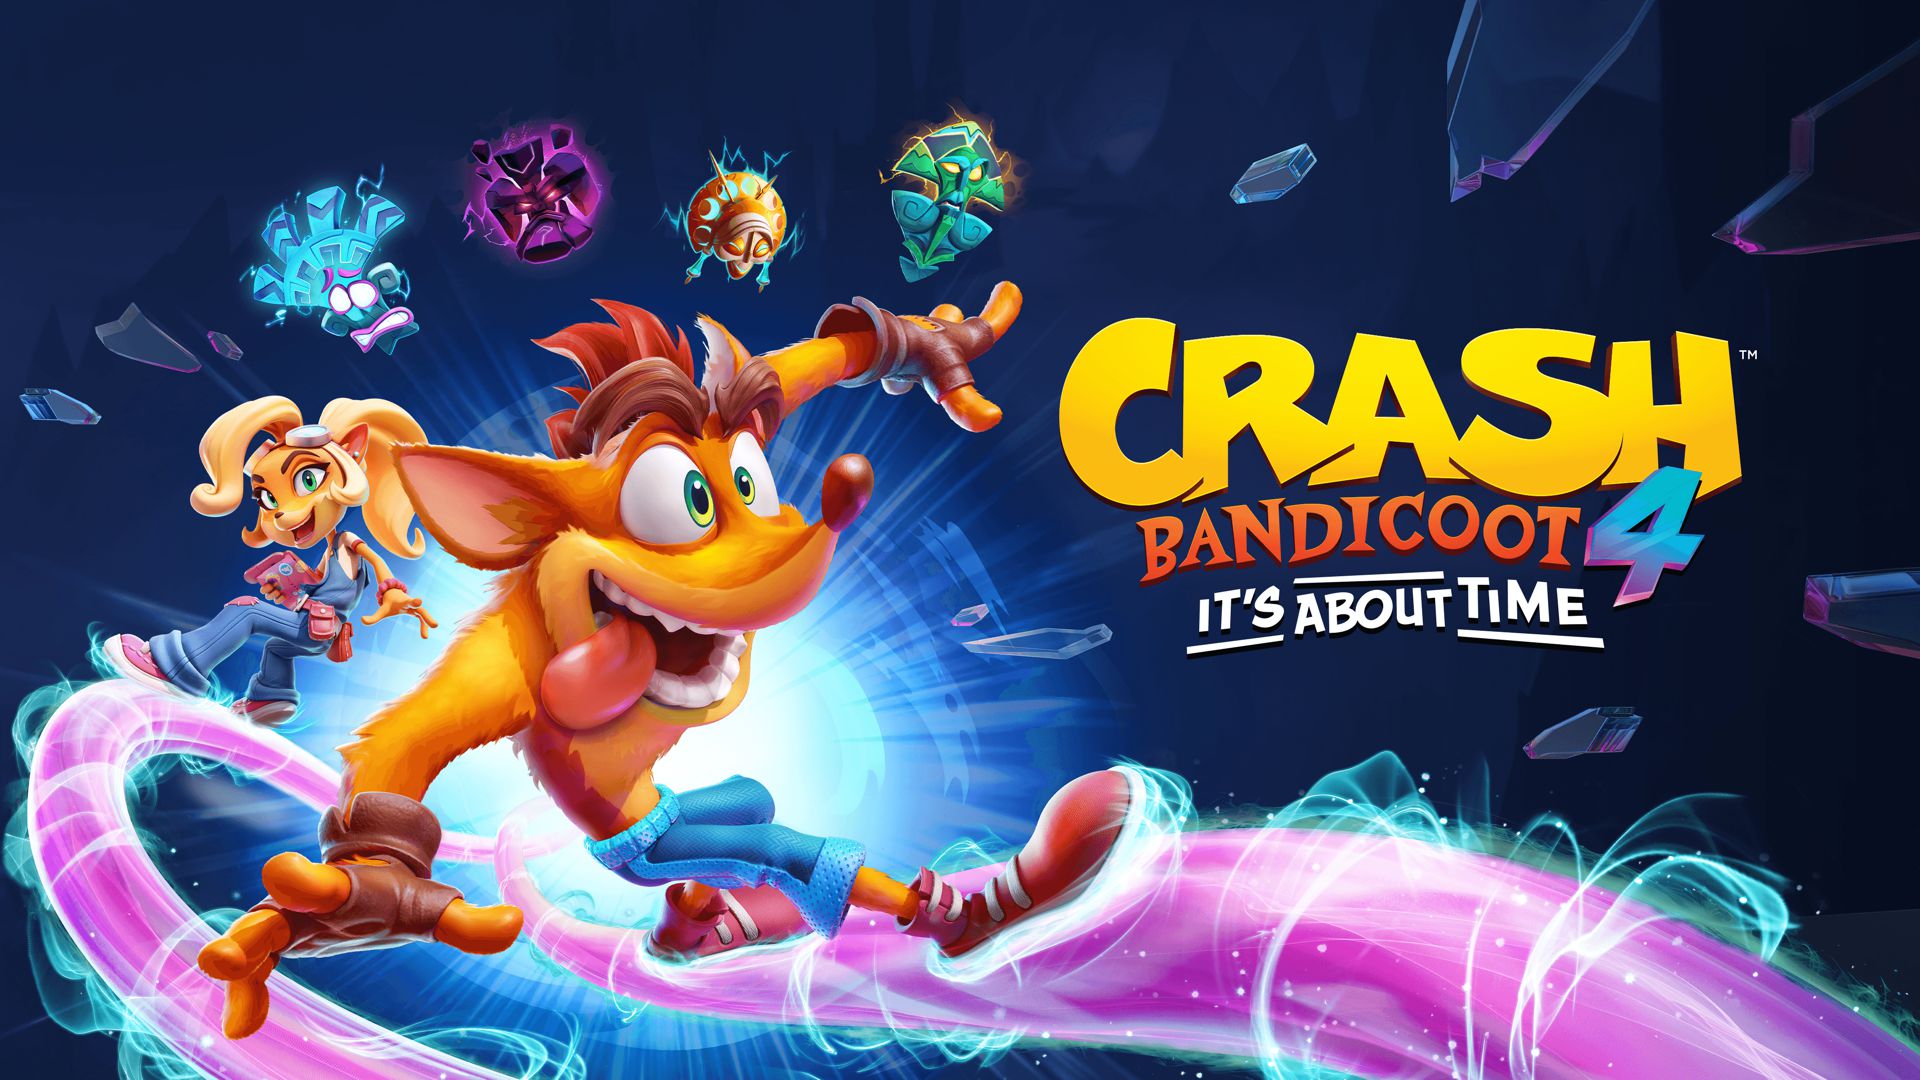 Crash Bandicoot 4 It